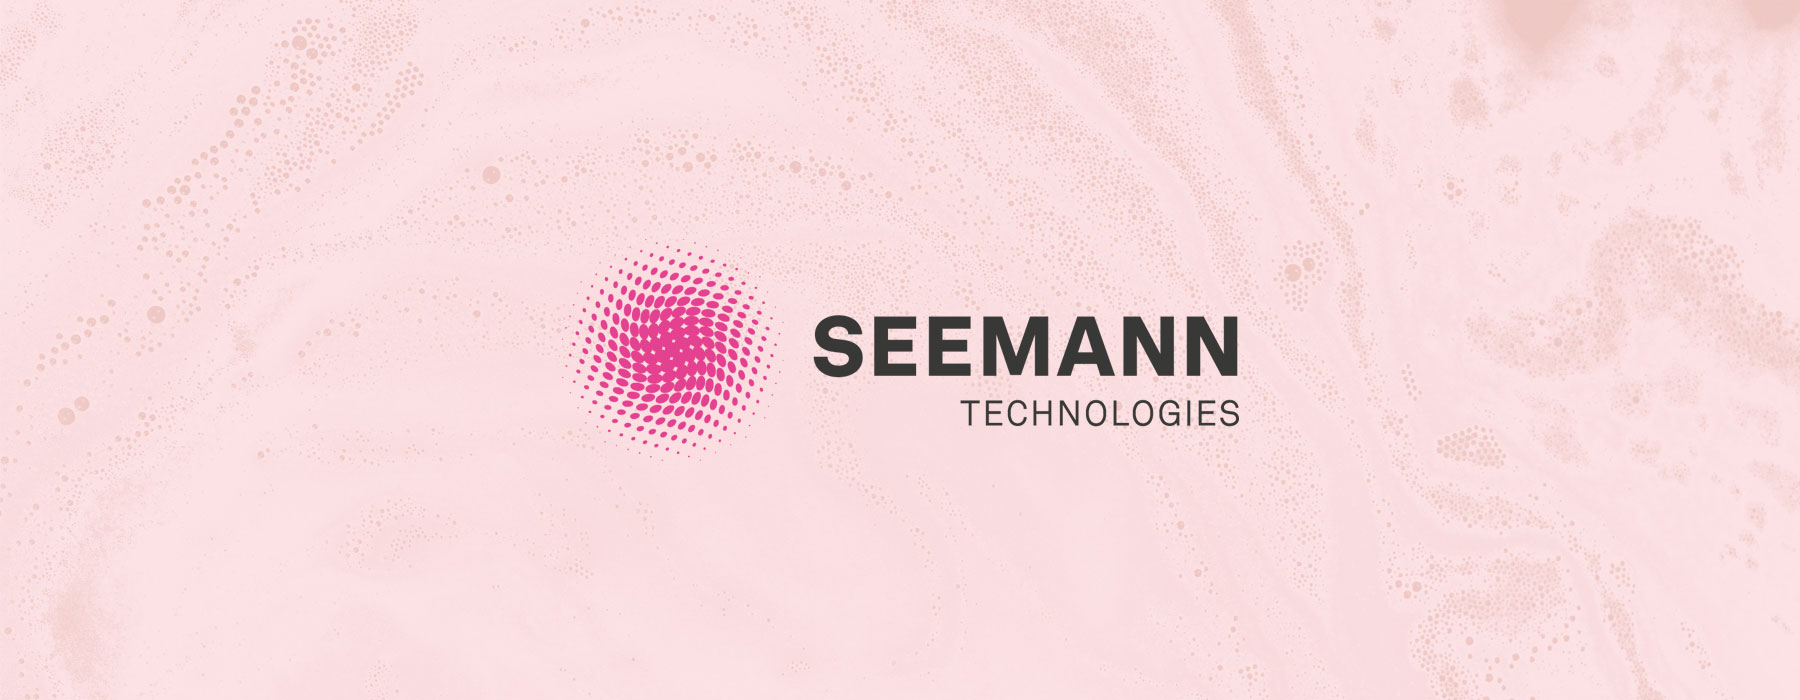 Seemann Technologies Logokonzeption